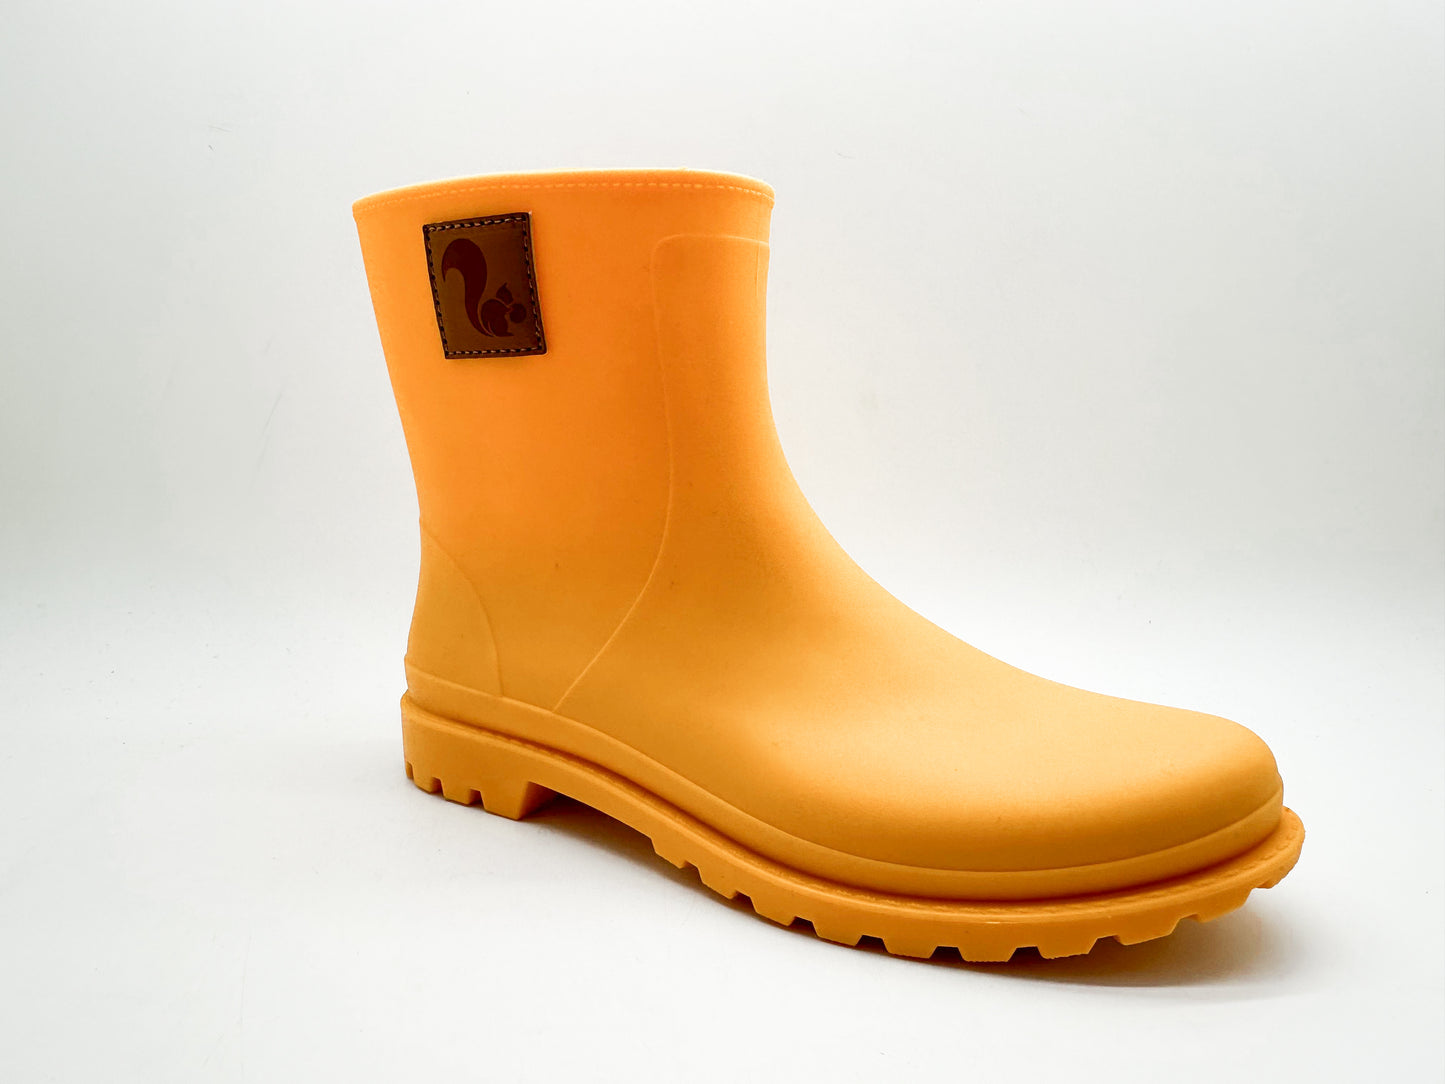 thies ® Bio Rainboot orange juice vegan (W) | 100% waterproof biodegradable rainboots